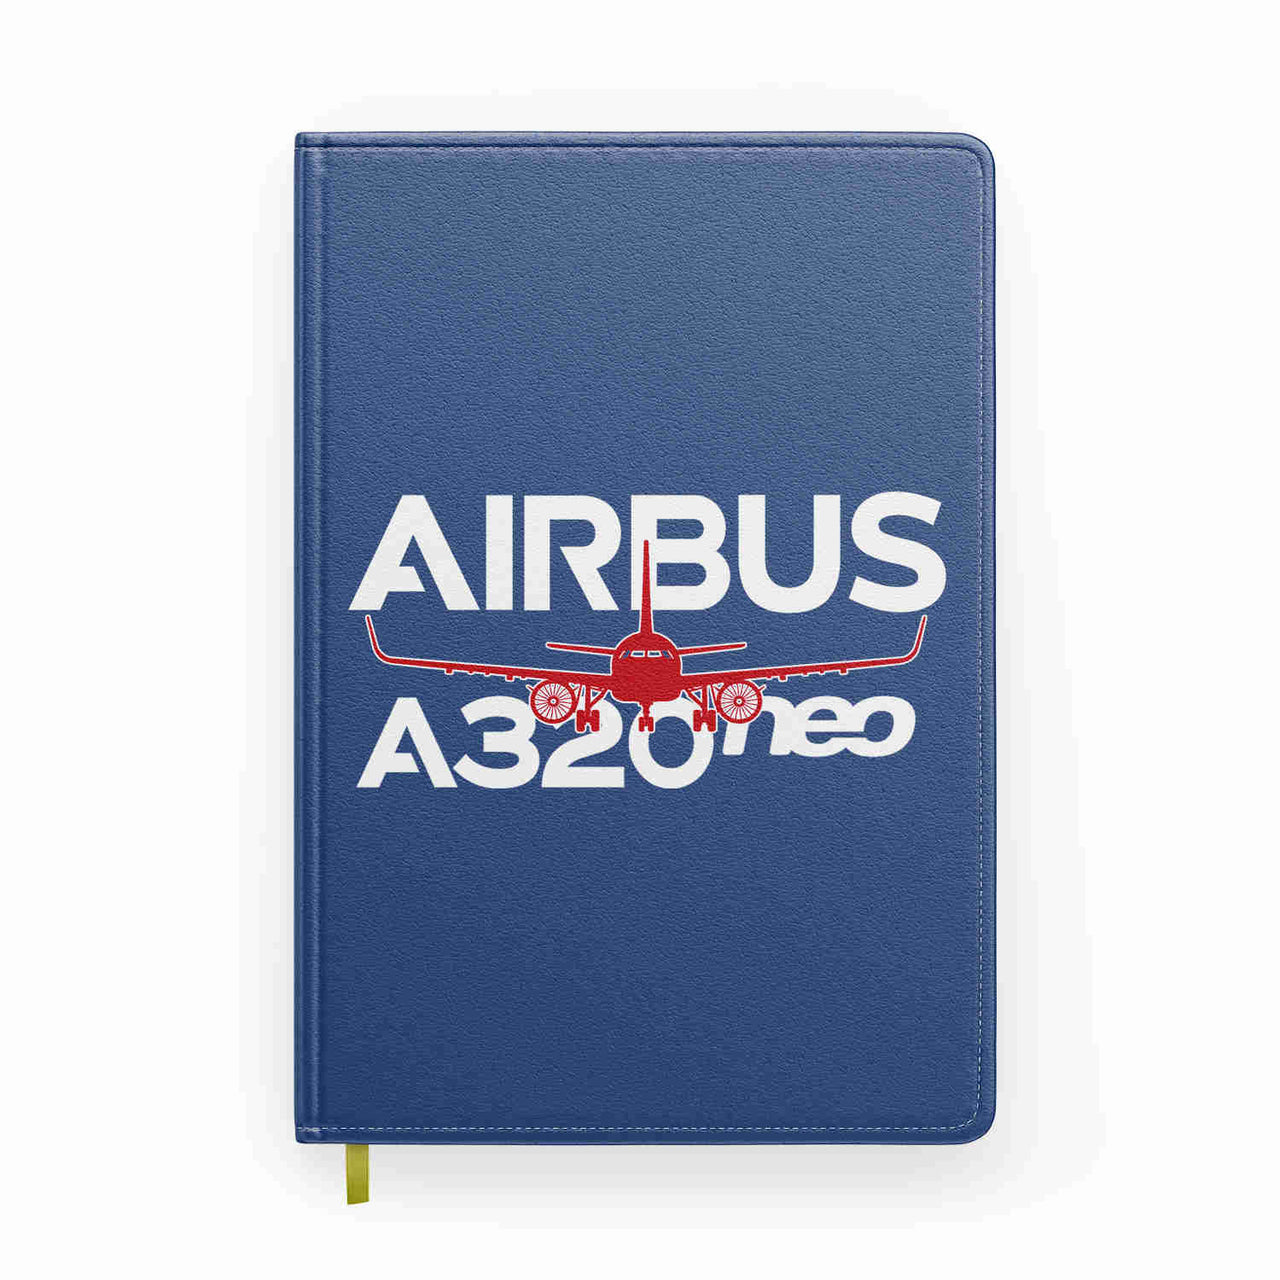 Amazing Airbus A320neo Designed Notebooks